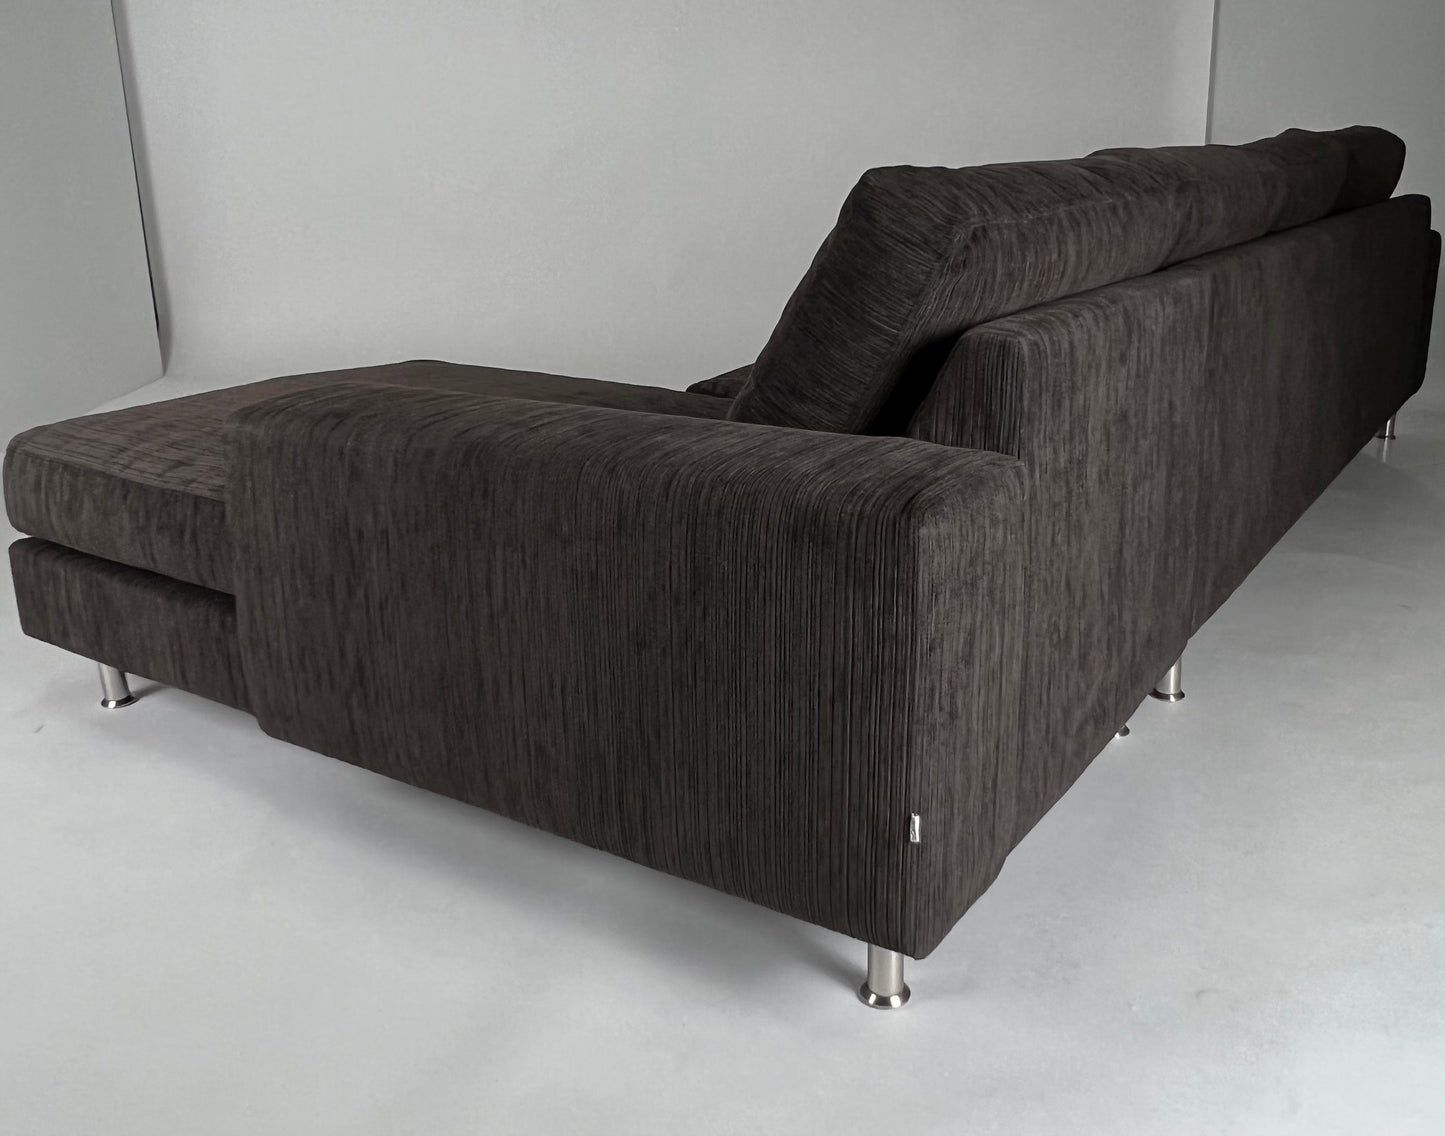 Charcoal gray / black RAF sectional sofa